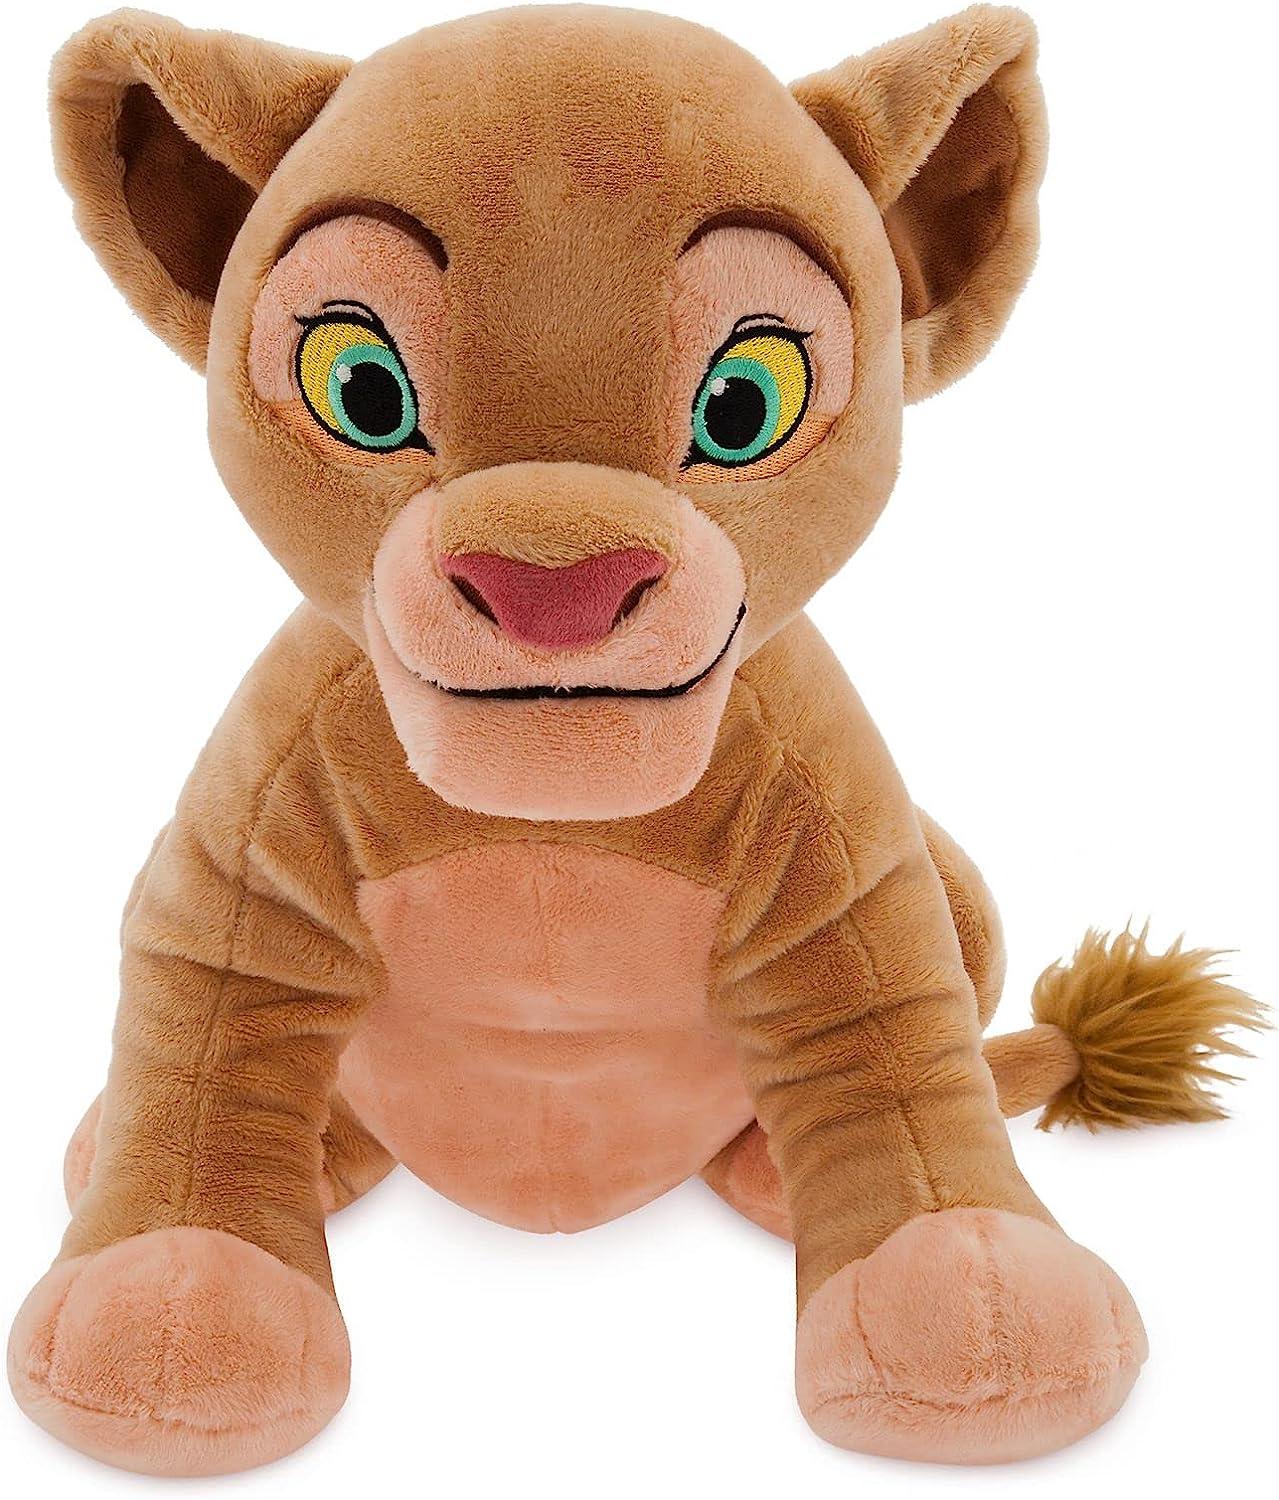 Disney Store Official NALA Medium Soft Plush Toy The Lion King, 32cm